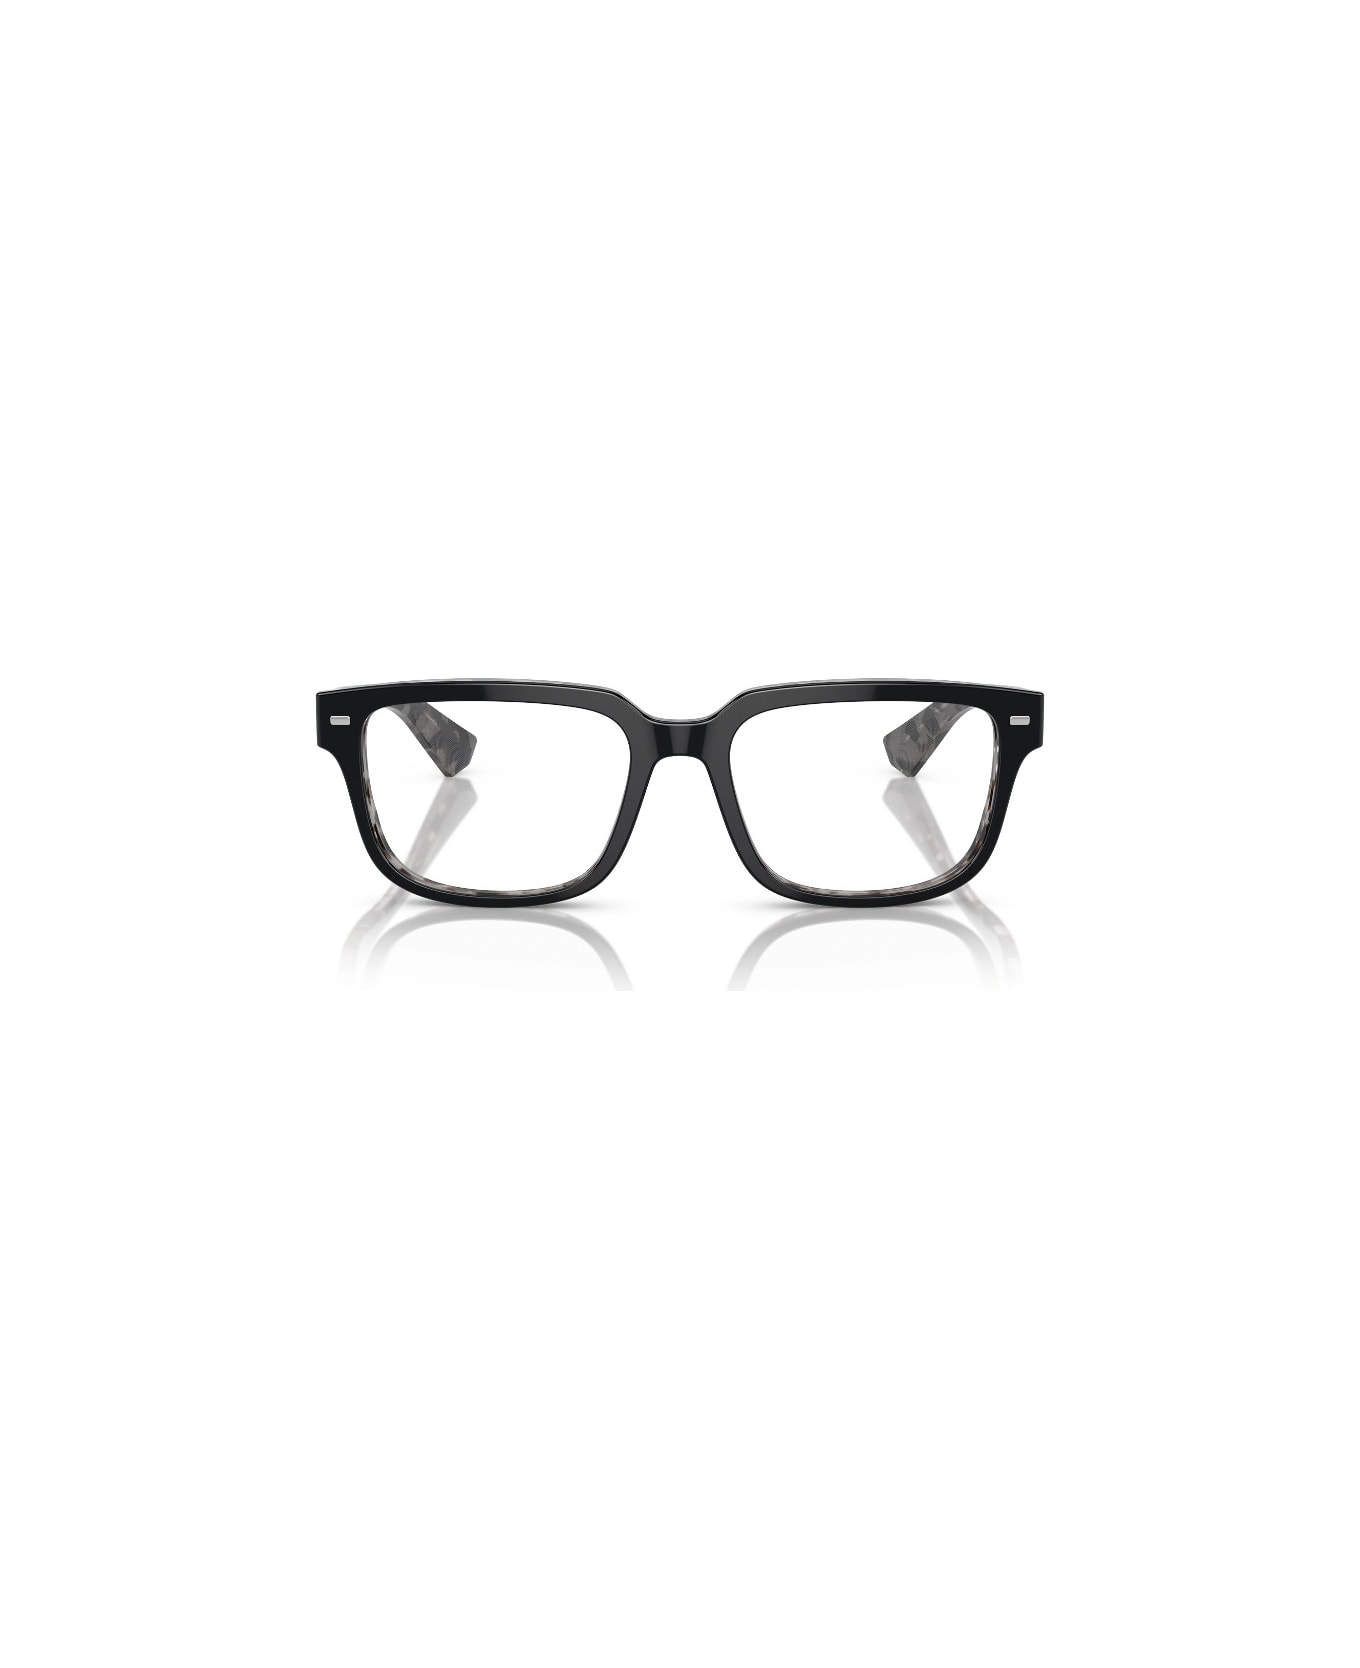 Dolce & Gabbana Eyewear DG3380 3403 Glasses